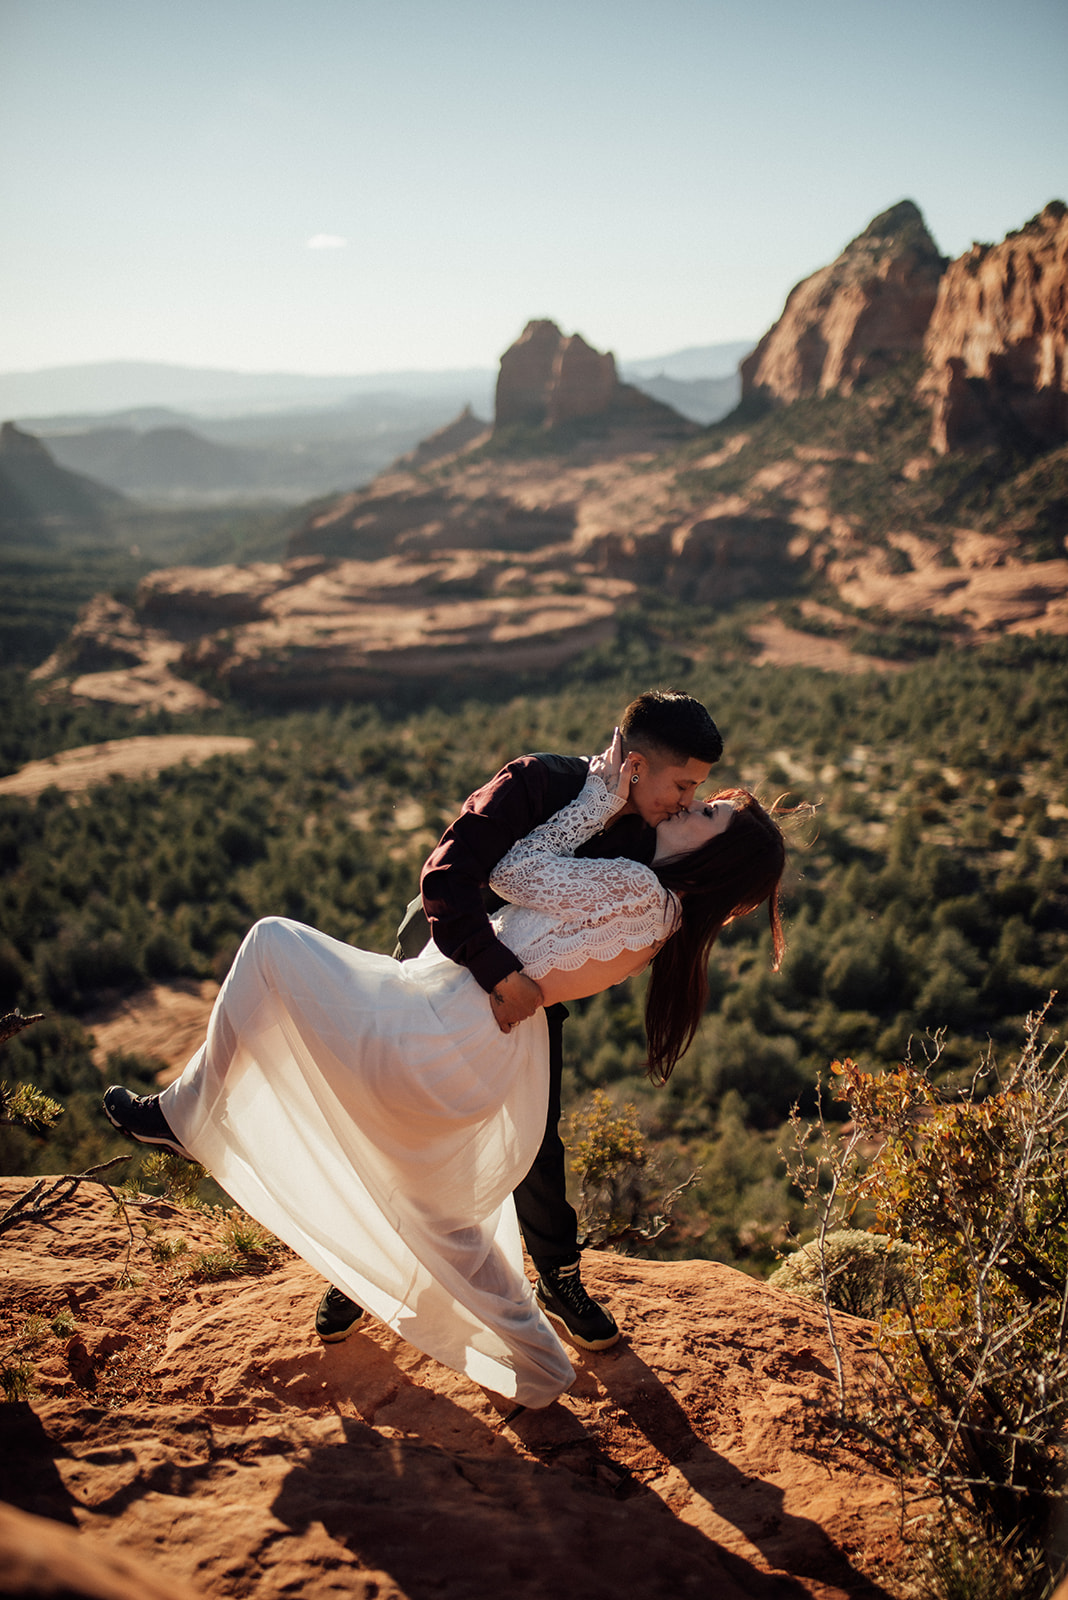 lbtgqia+ couple kissing with Sedona red rock vista behind